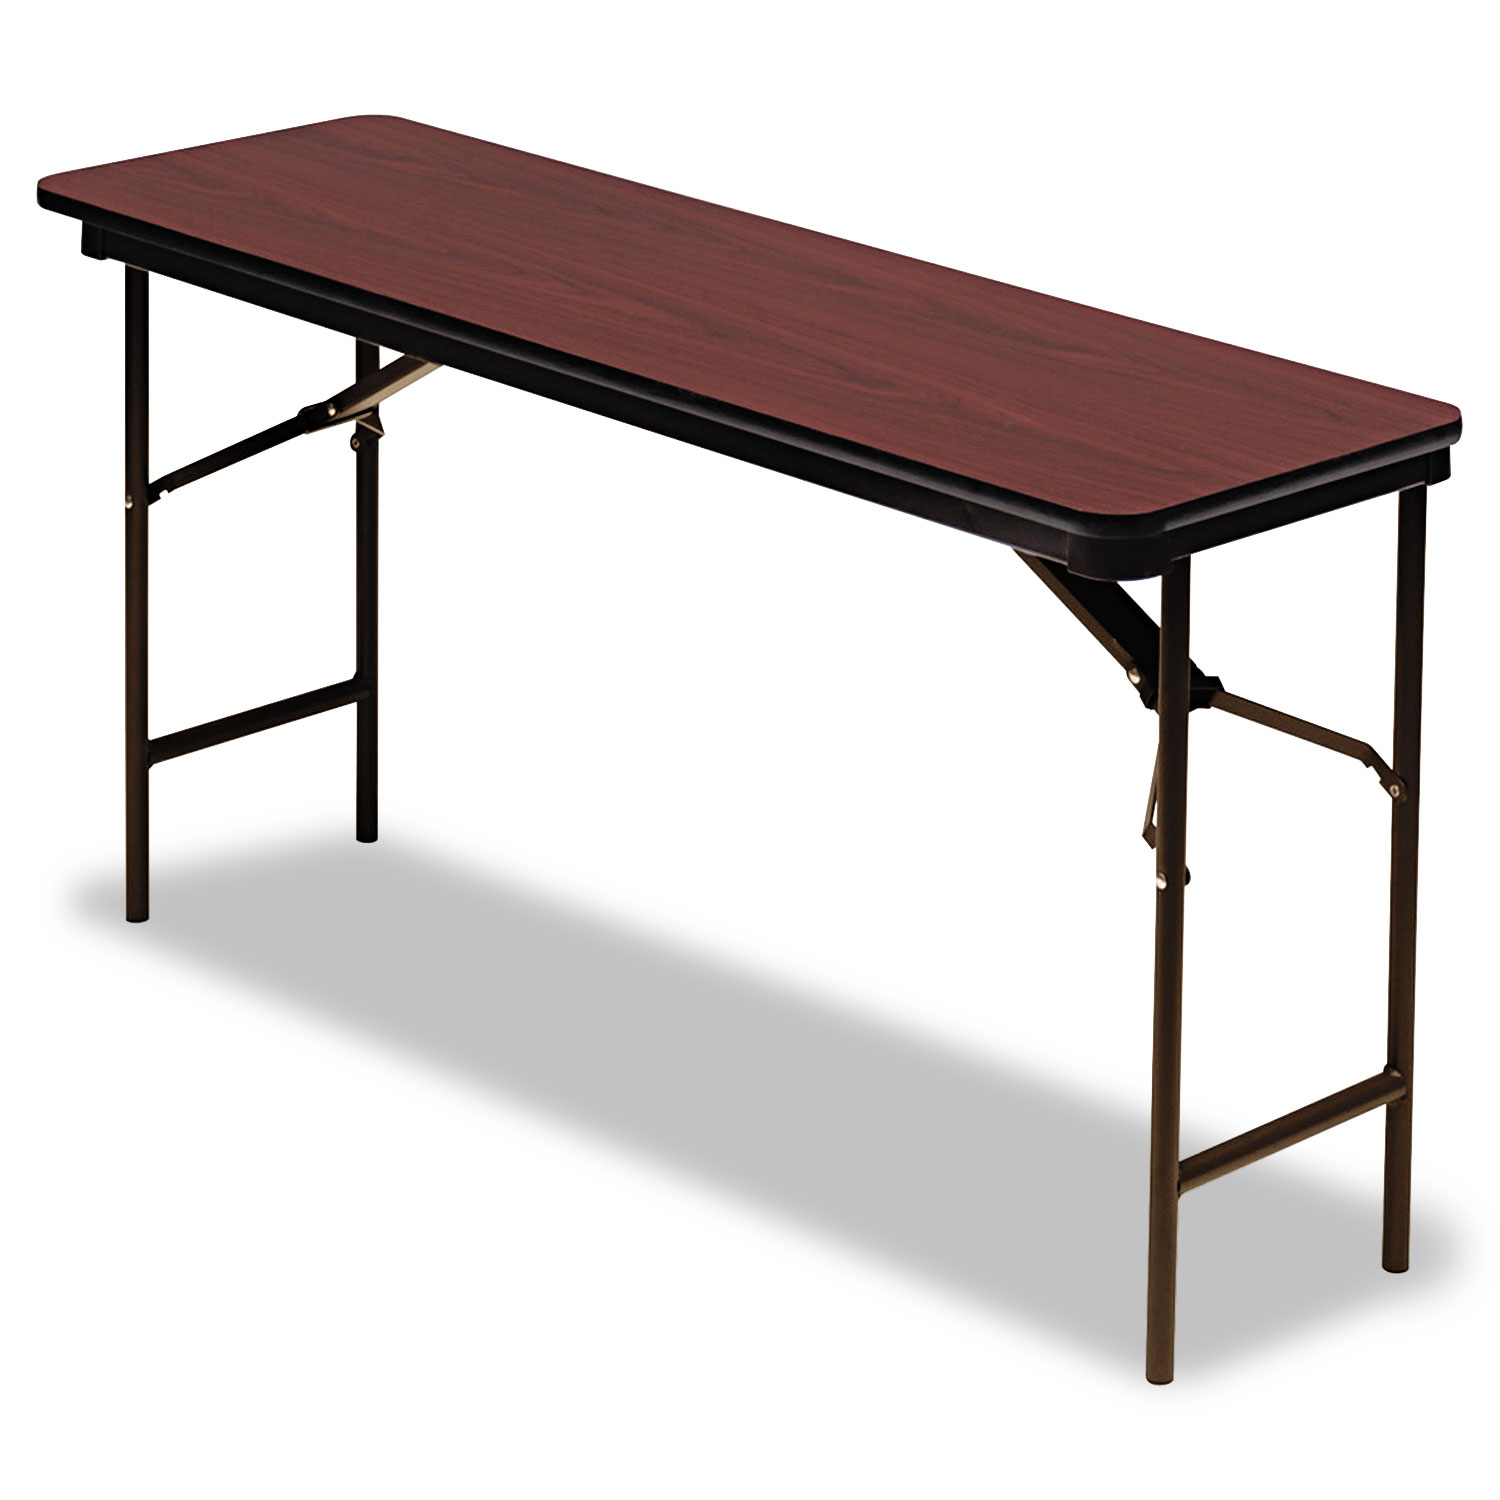  Iceberg 55274 Premium Wood Laminate Folding Table, Rectangular, 60w x 18d x 29h, Mahogany (ICE55274) 